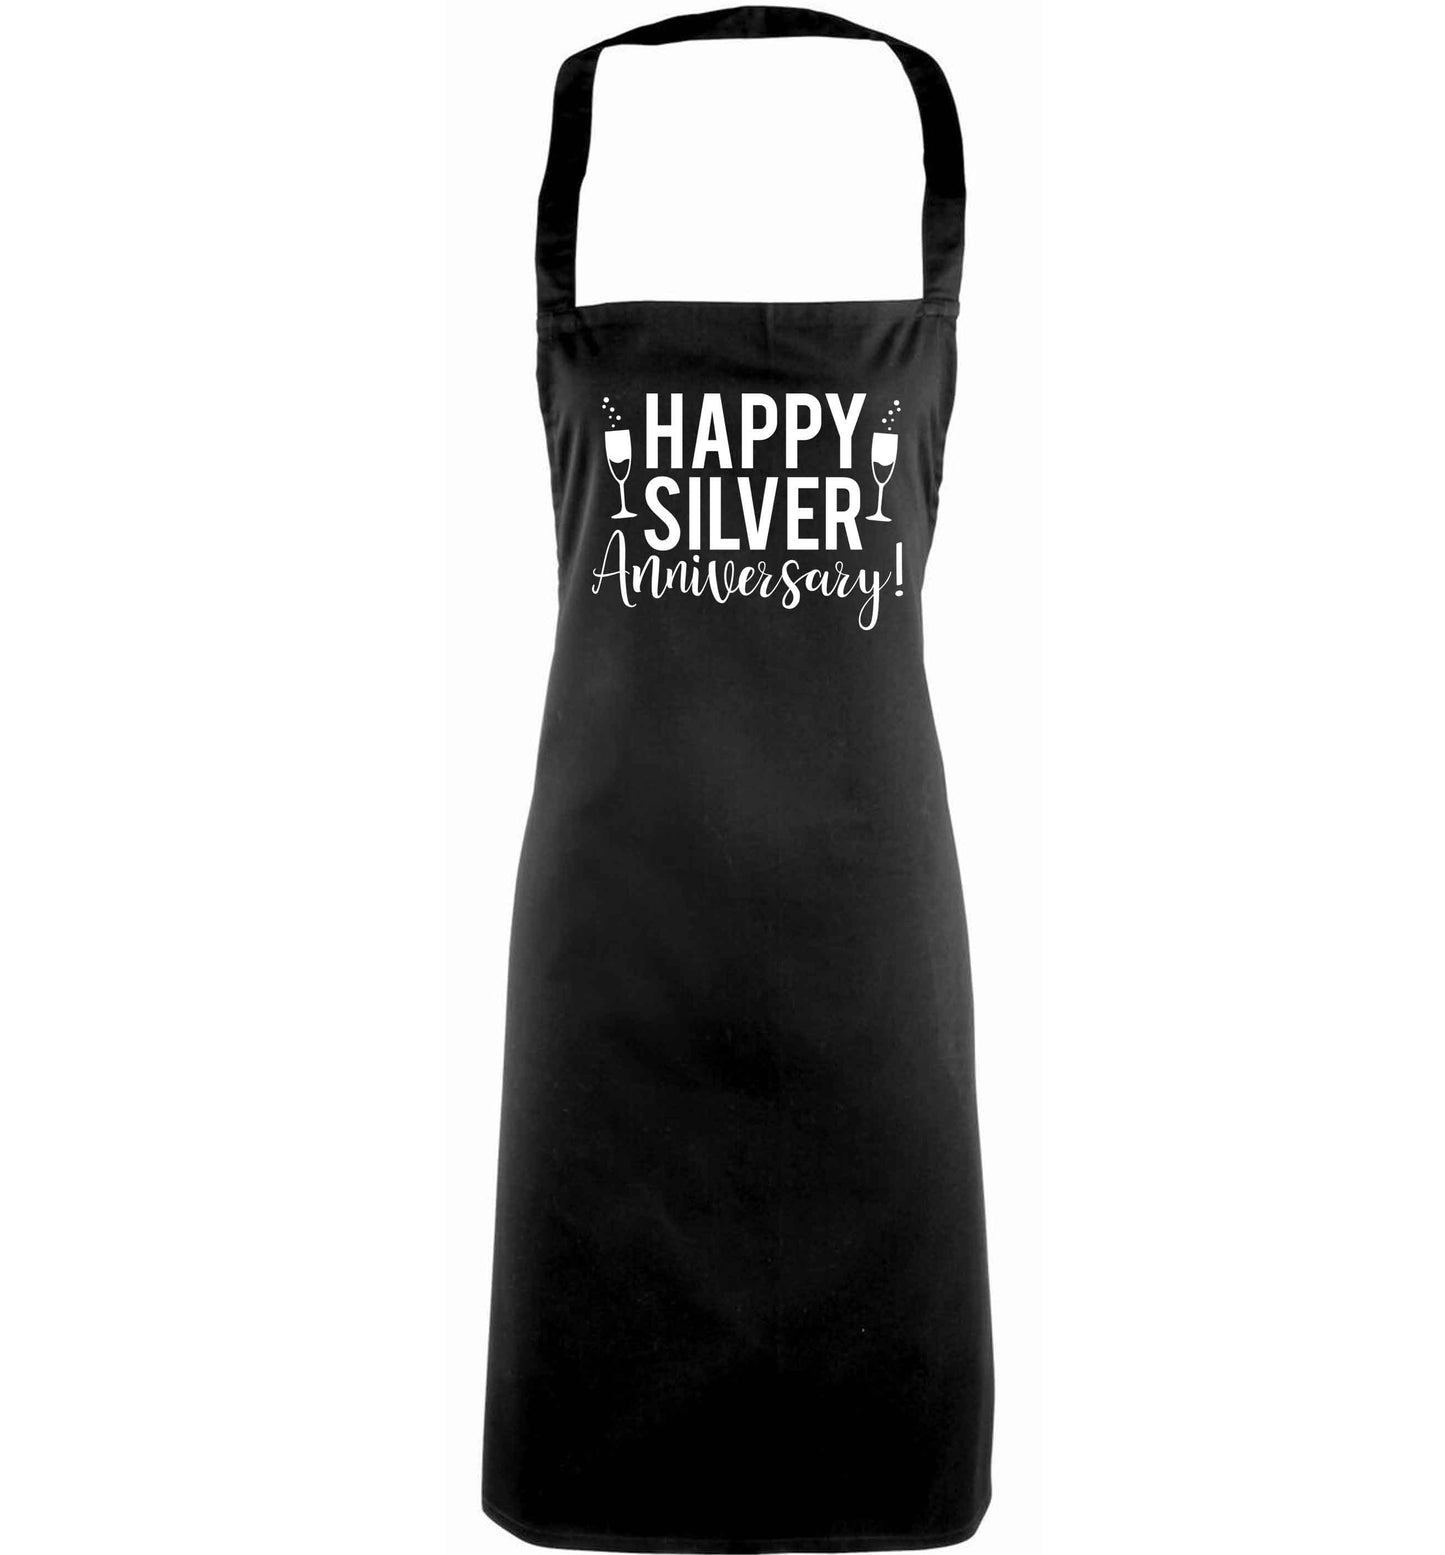 Happy silver anniversary! adults black apron